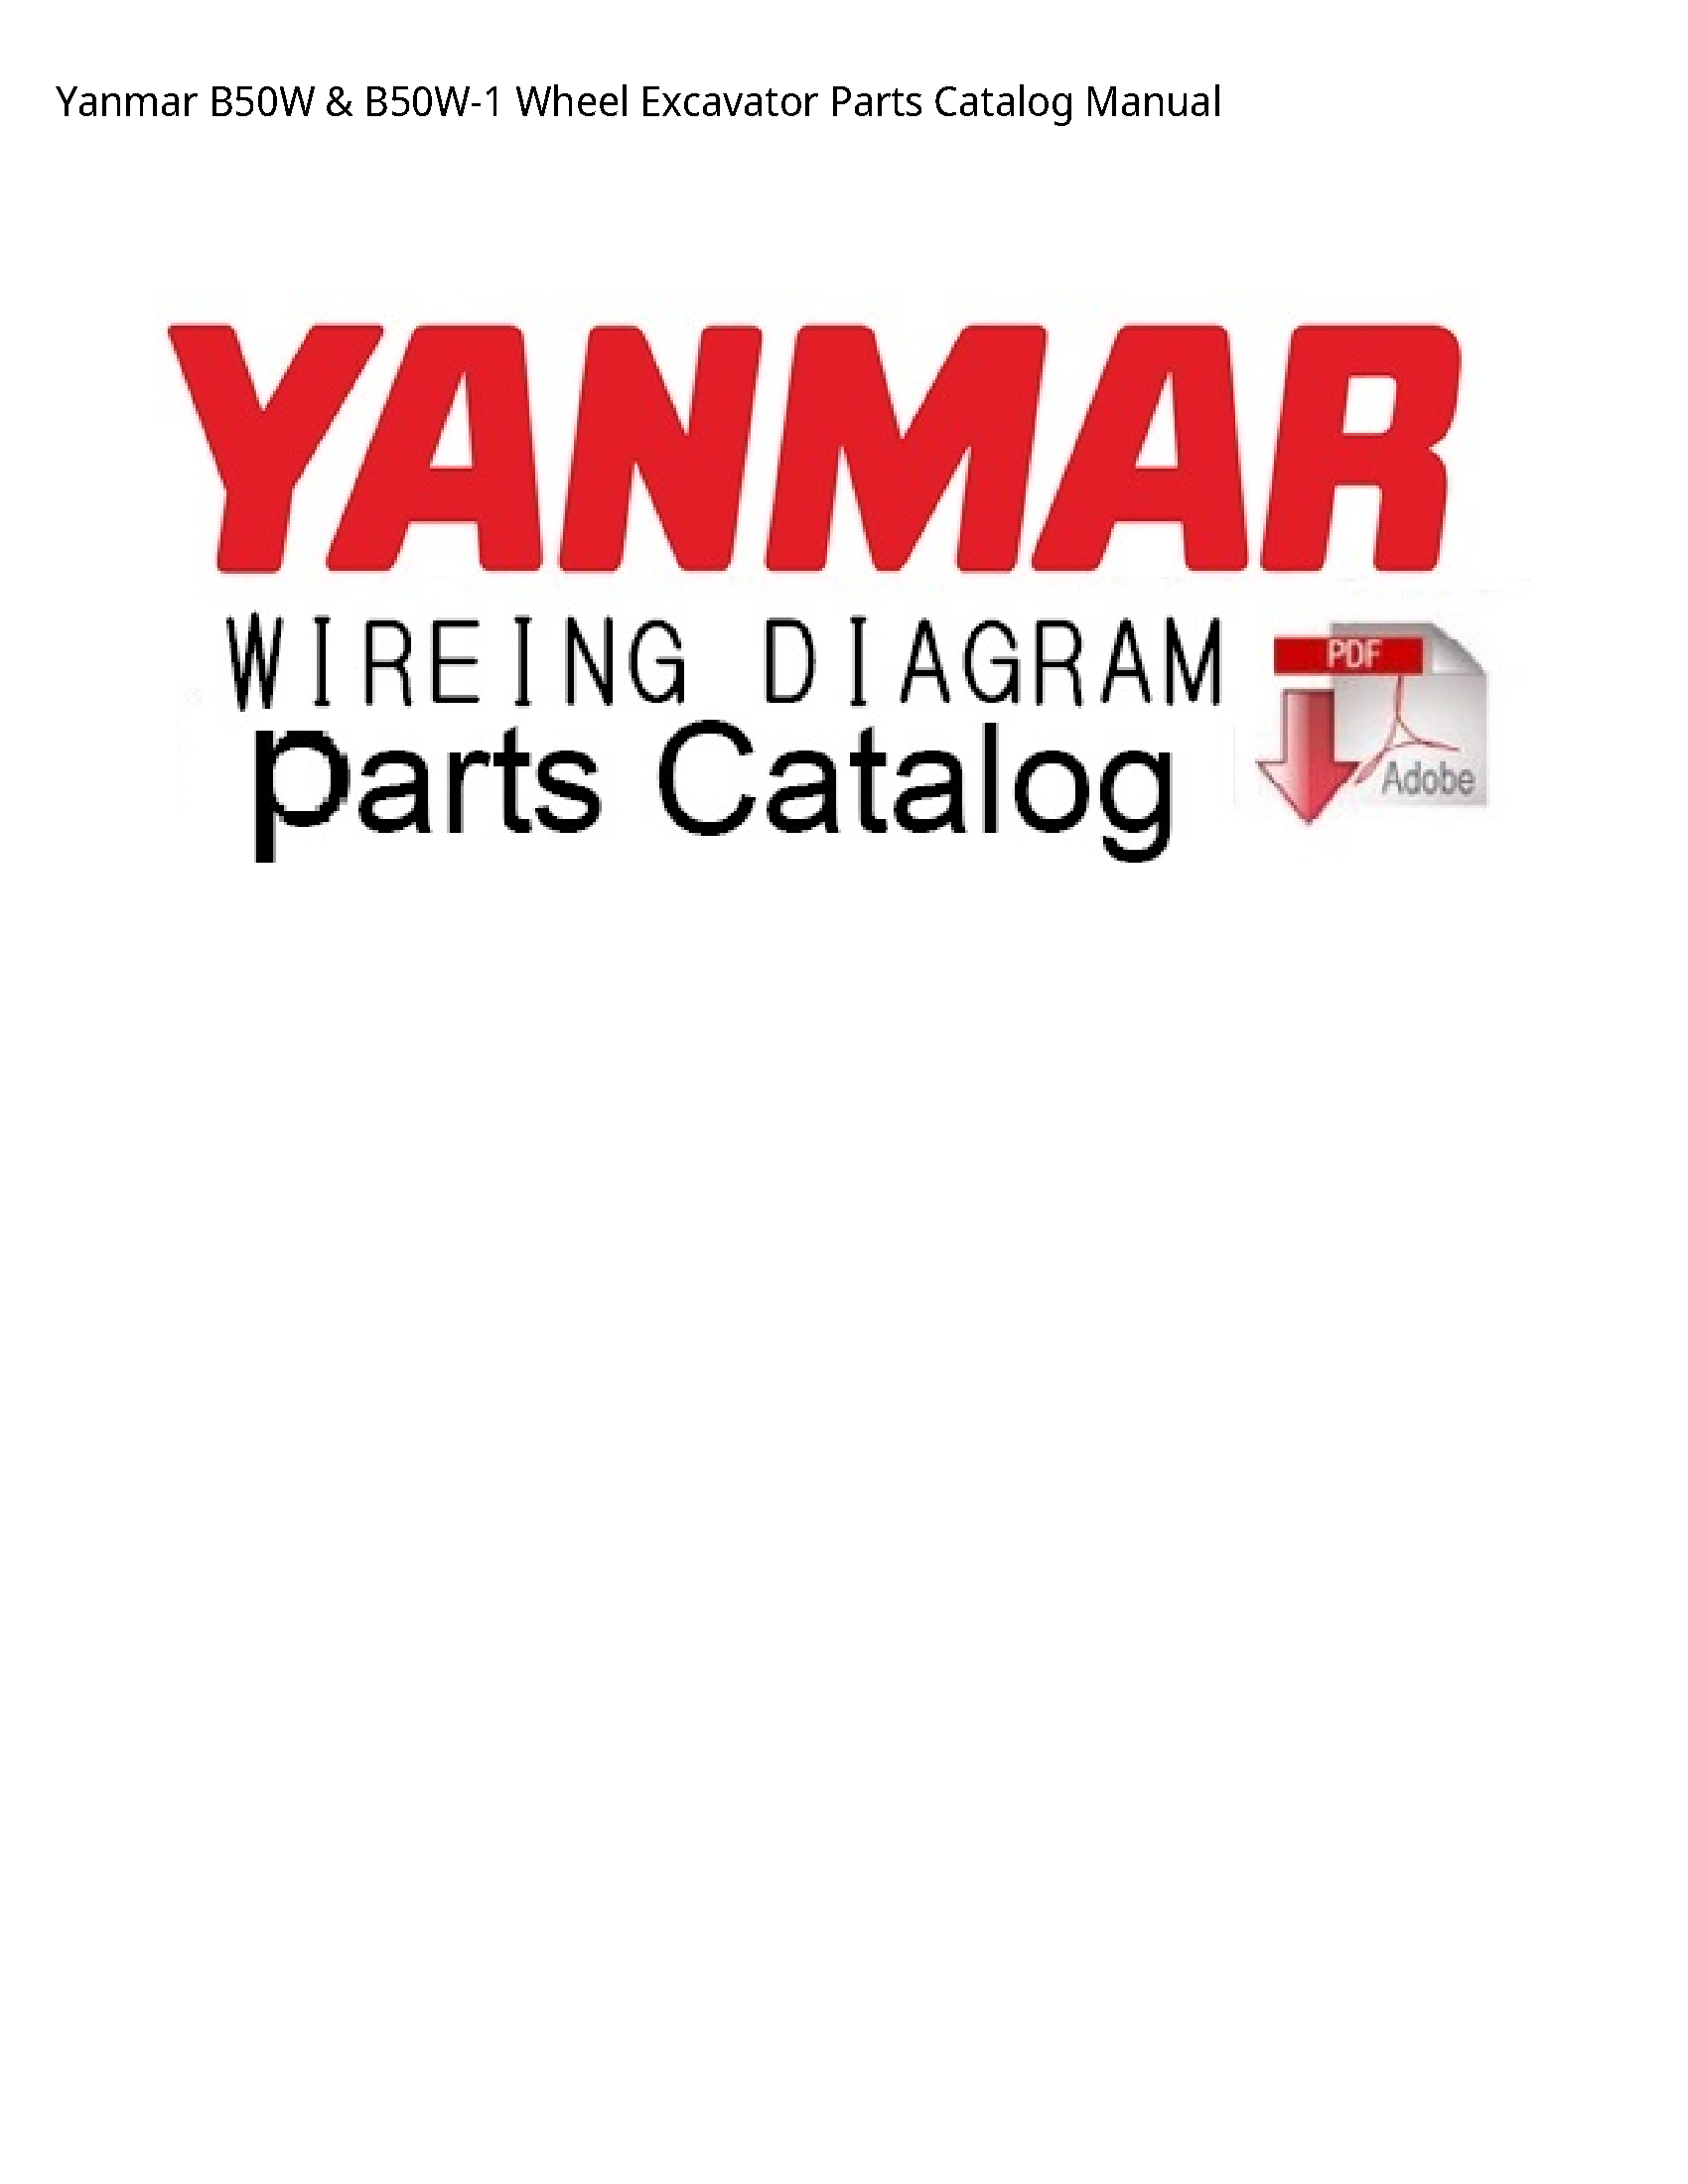 Yanmar B50W Wheel Excavator Parts Catalog manual